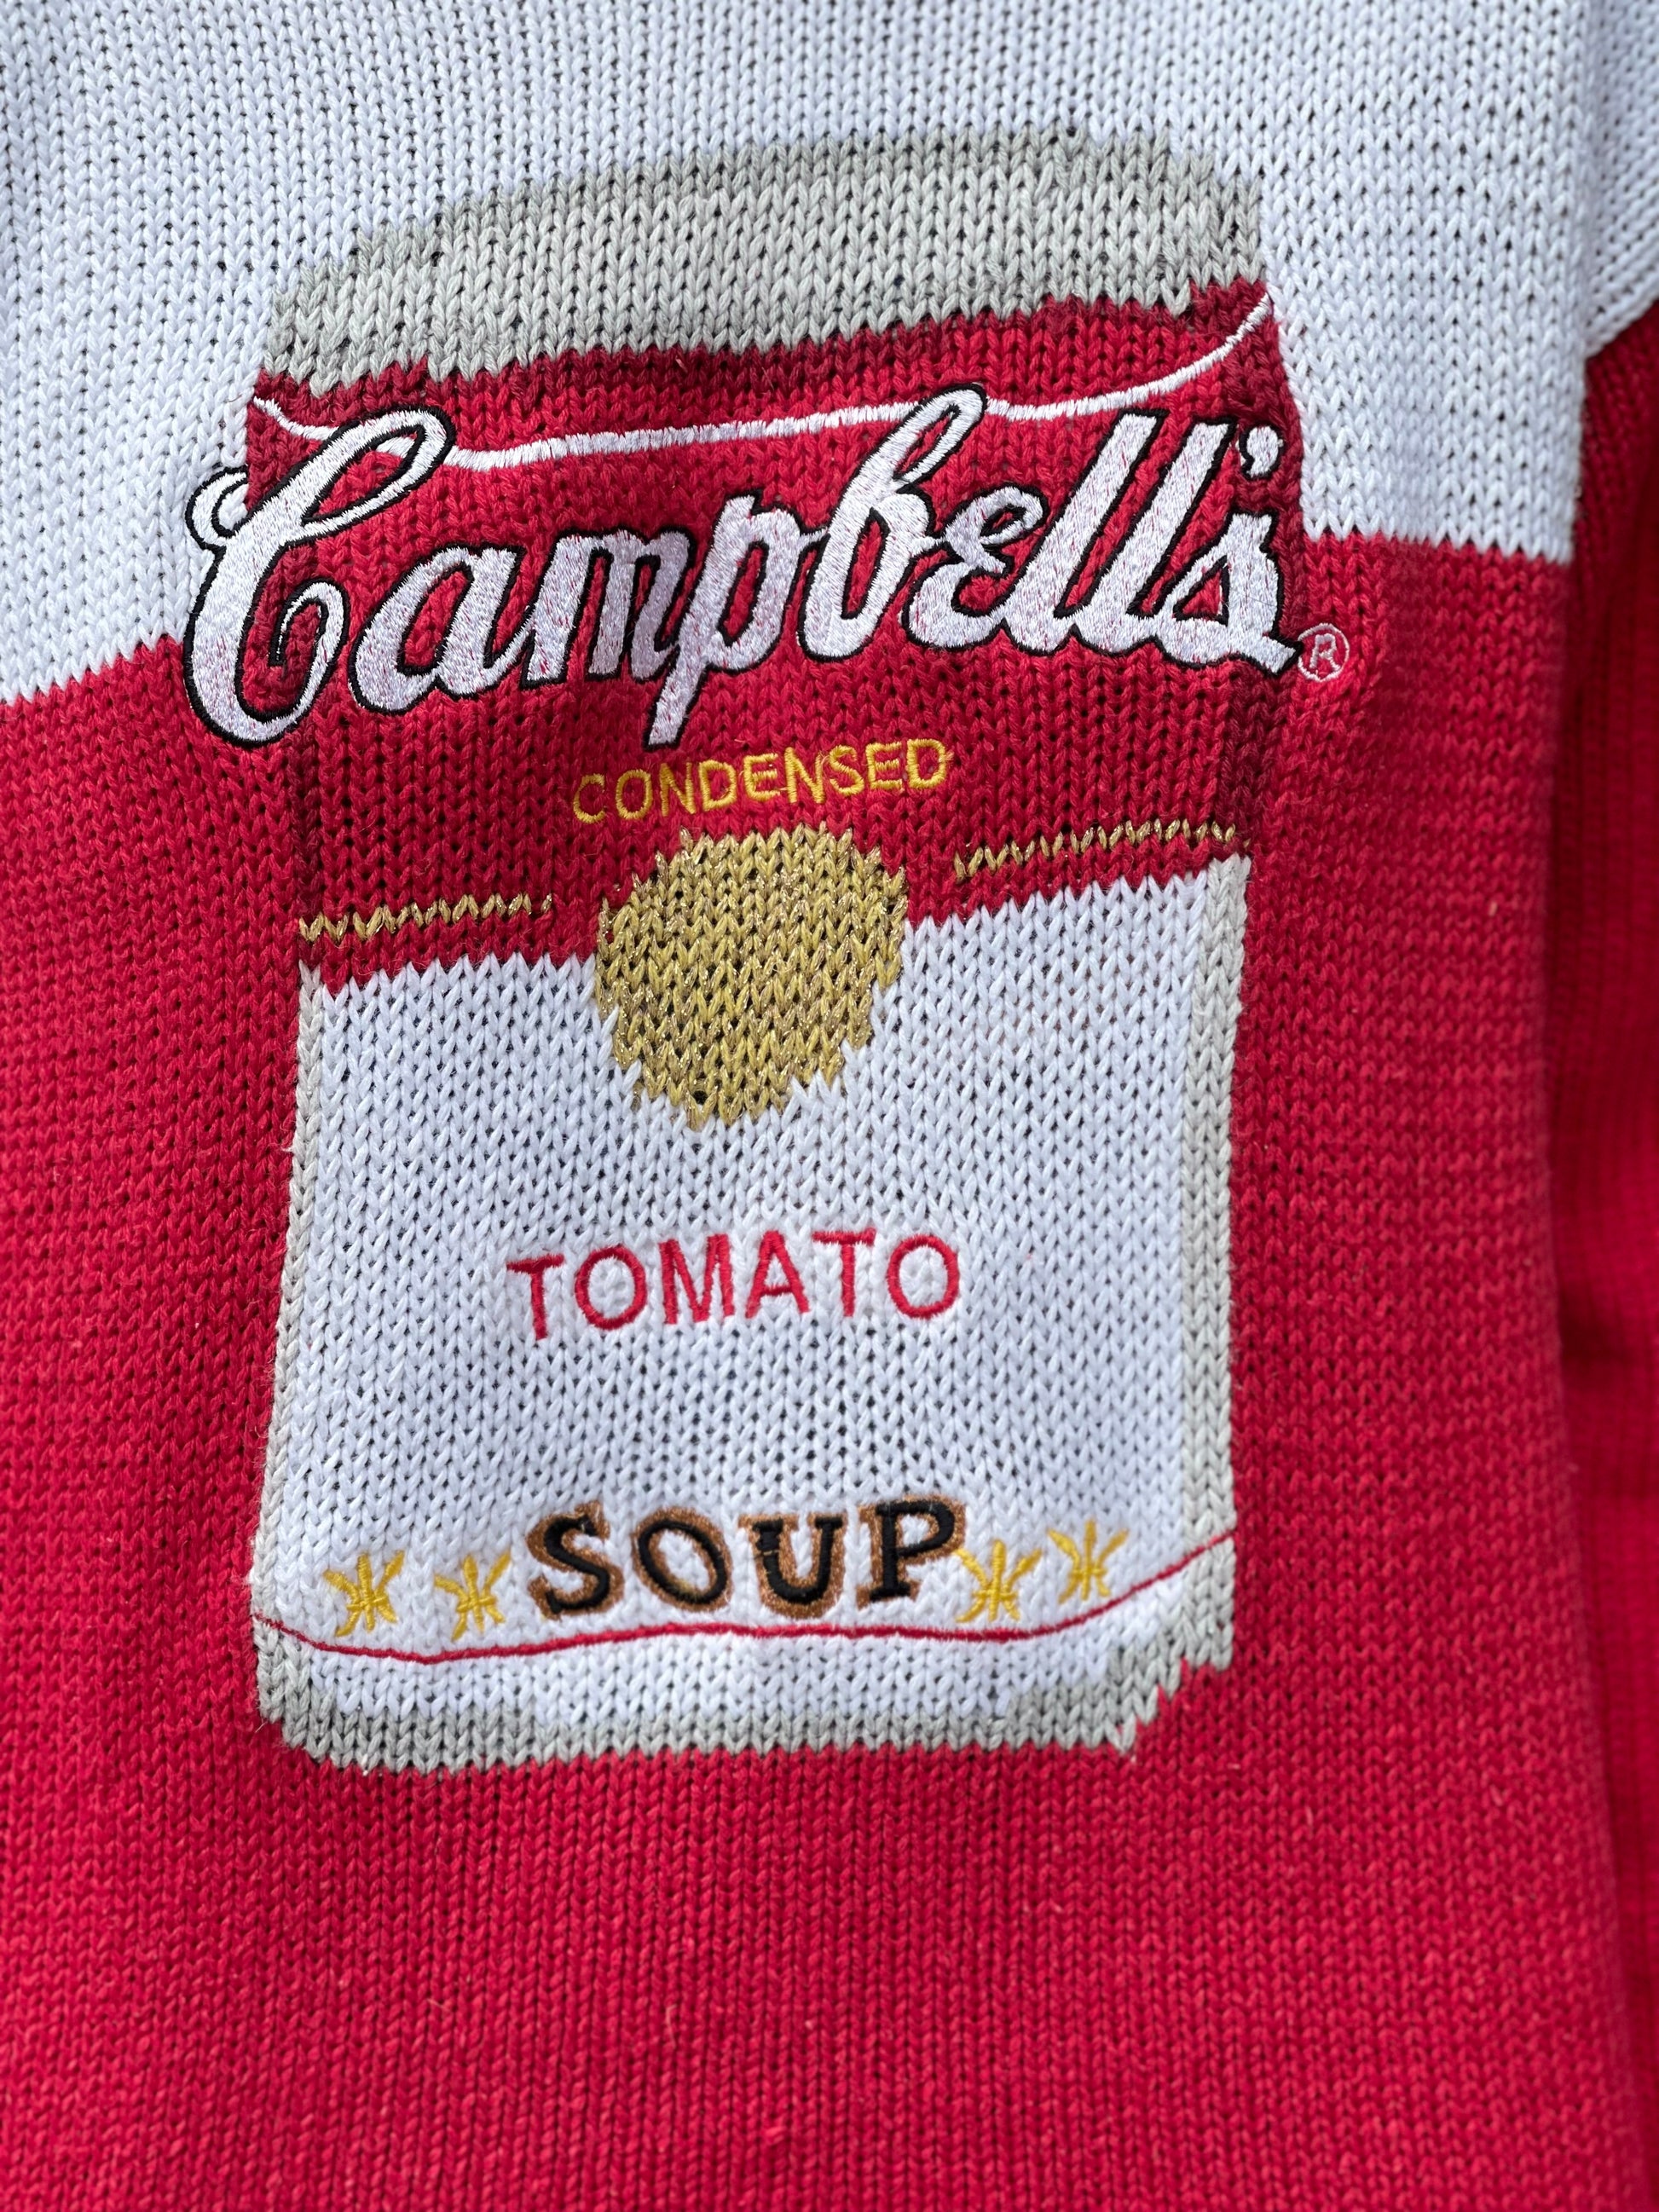 Vintage 90s Campbells Tomato Soup Sweater - Spark Pretty